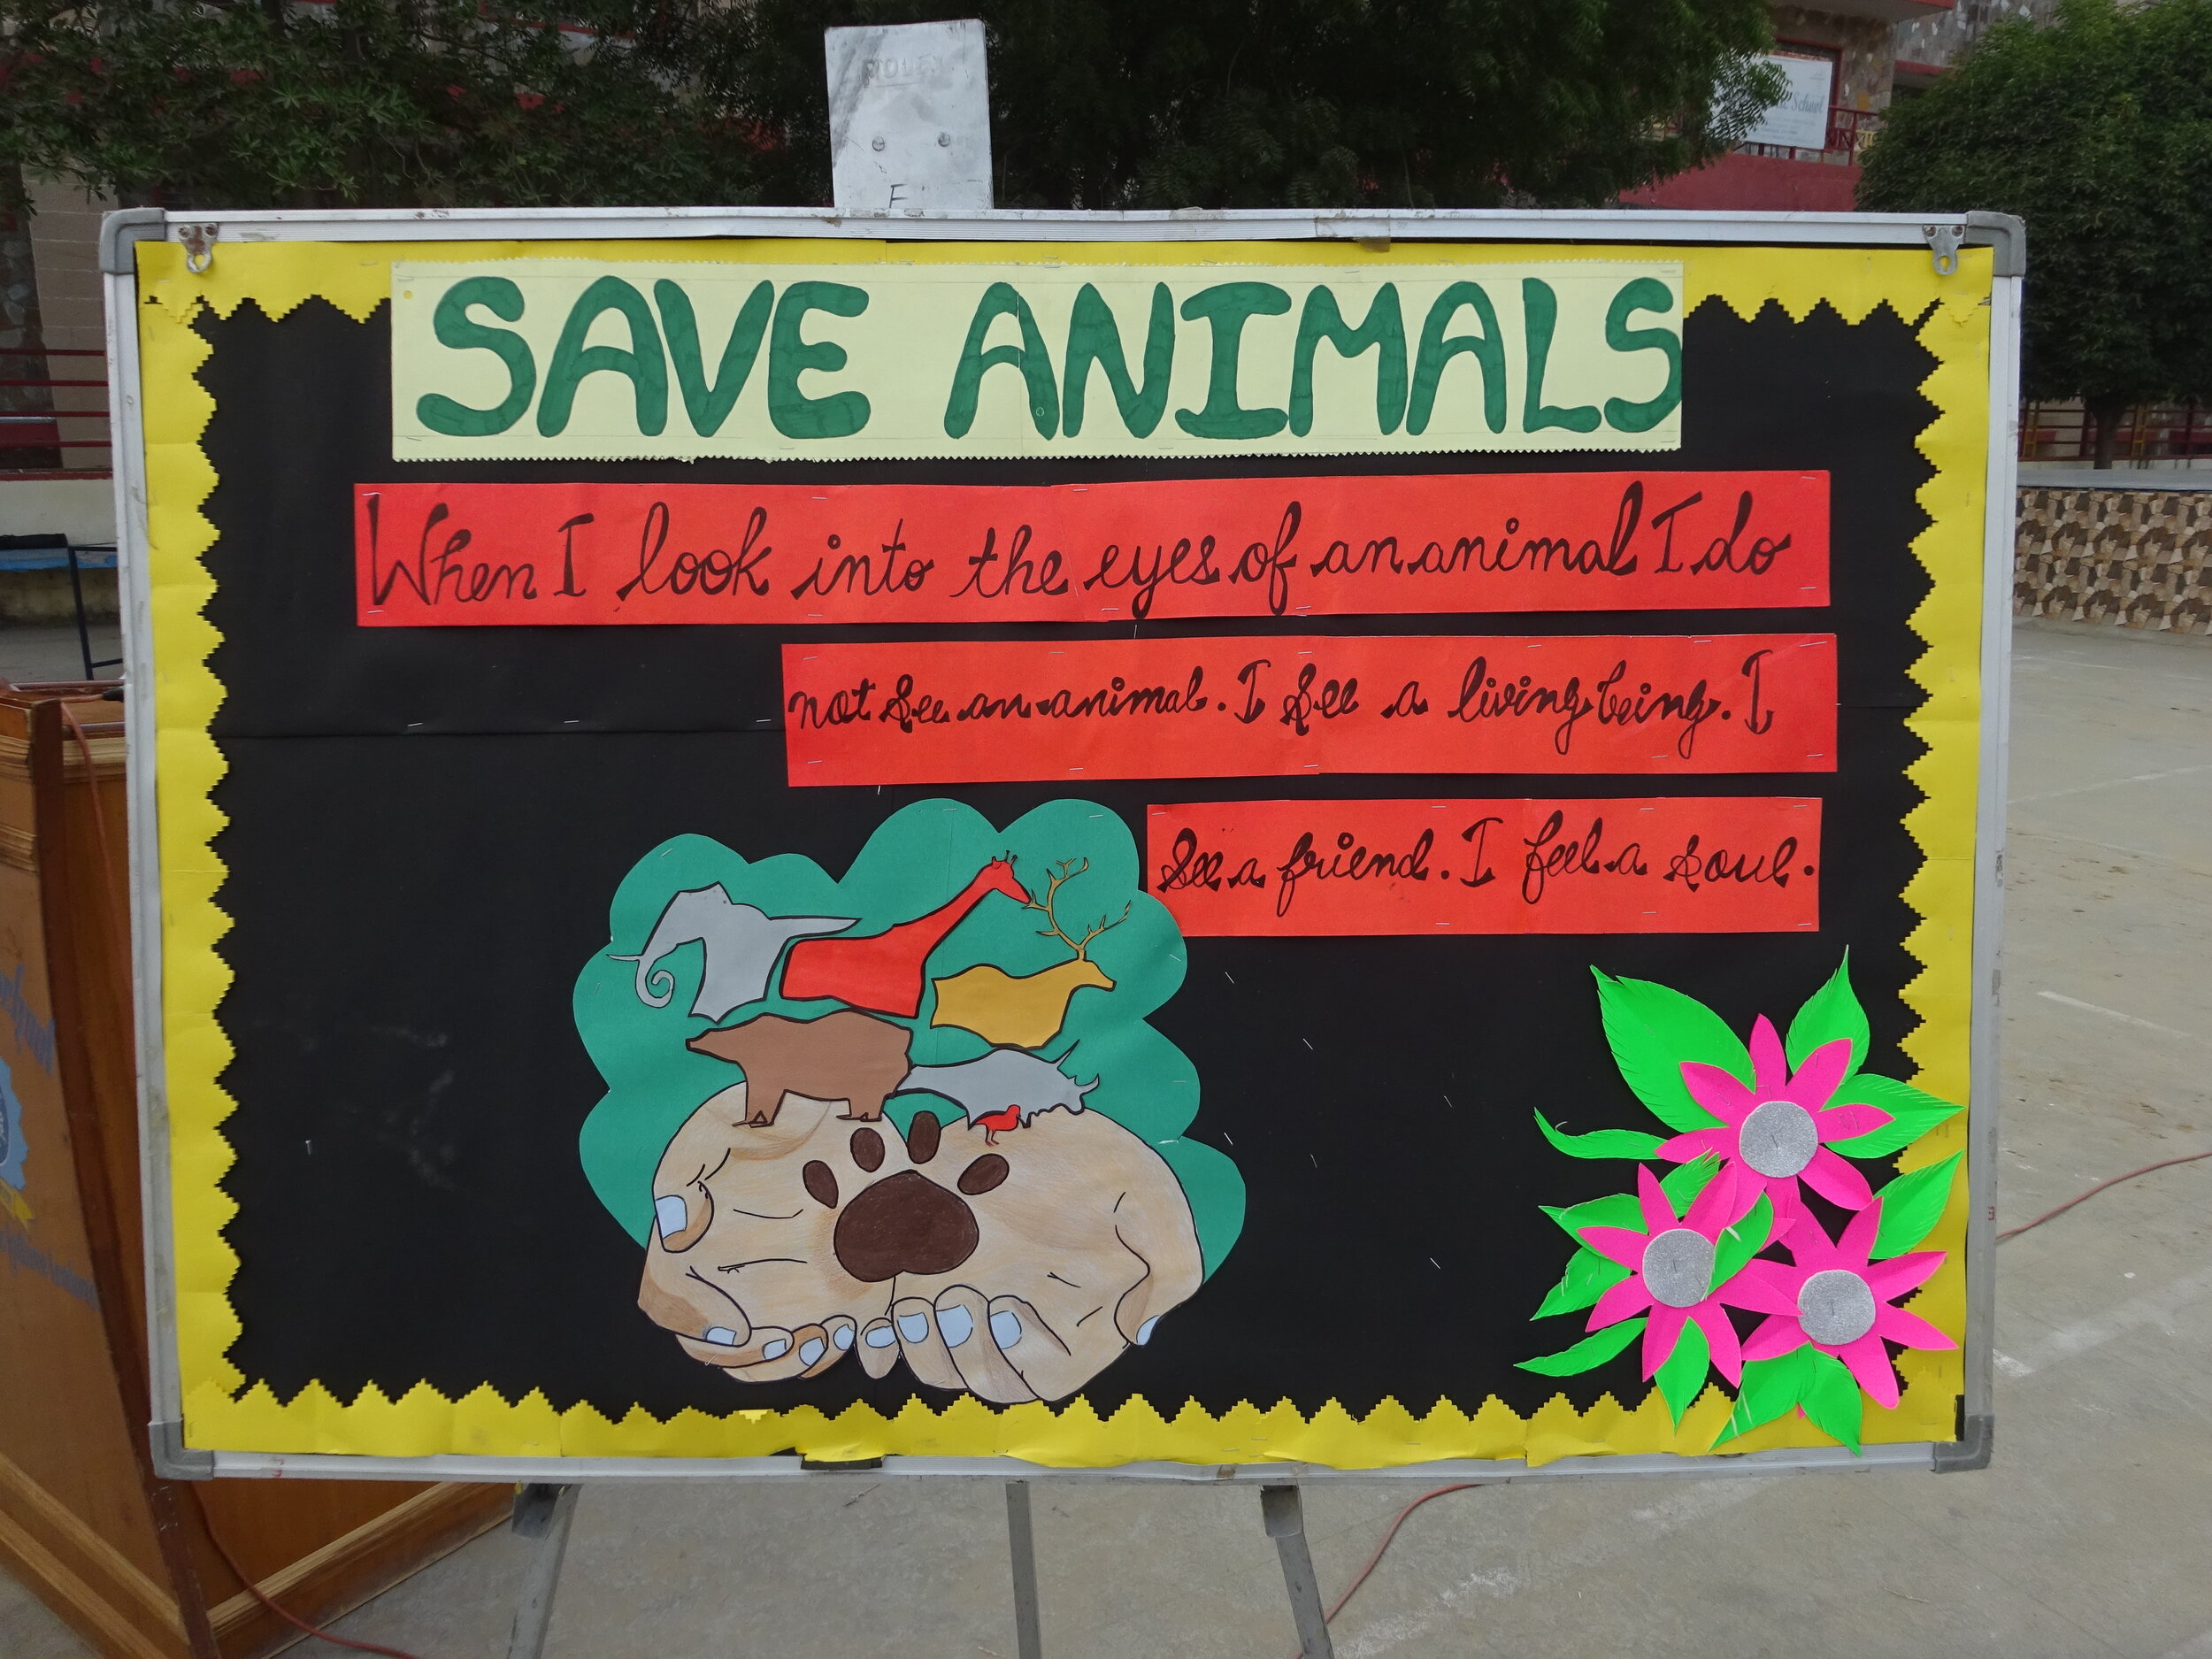 The rally on saving animals — Life-Link Friendship Schools